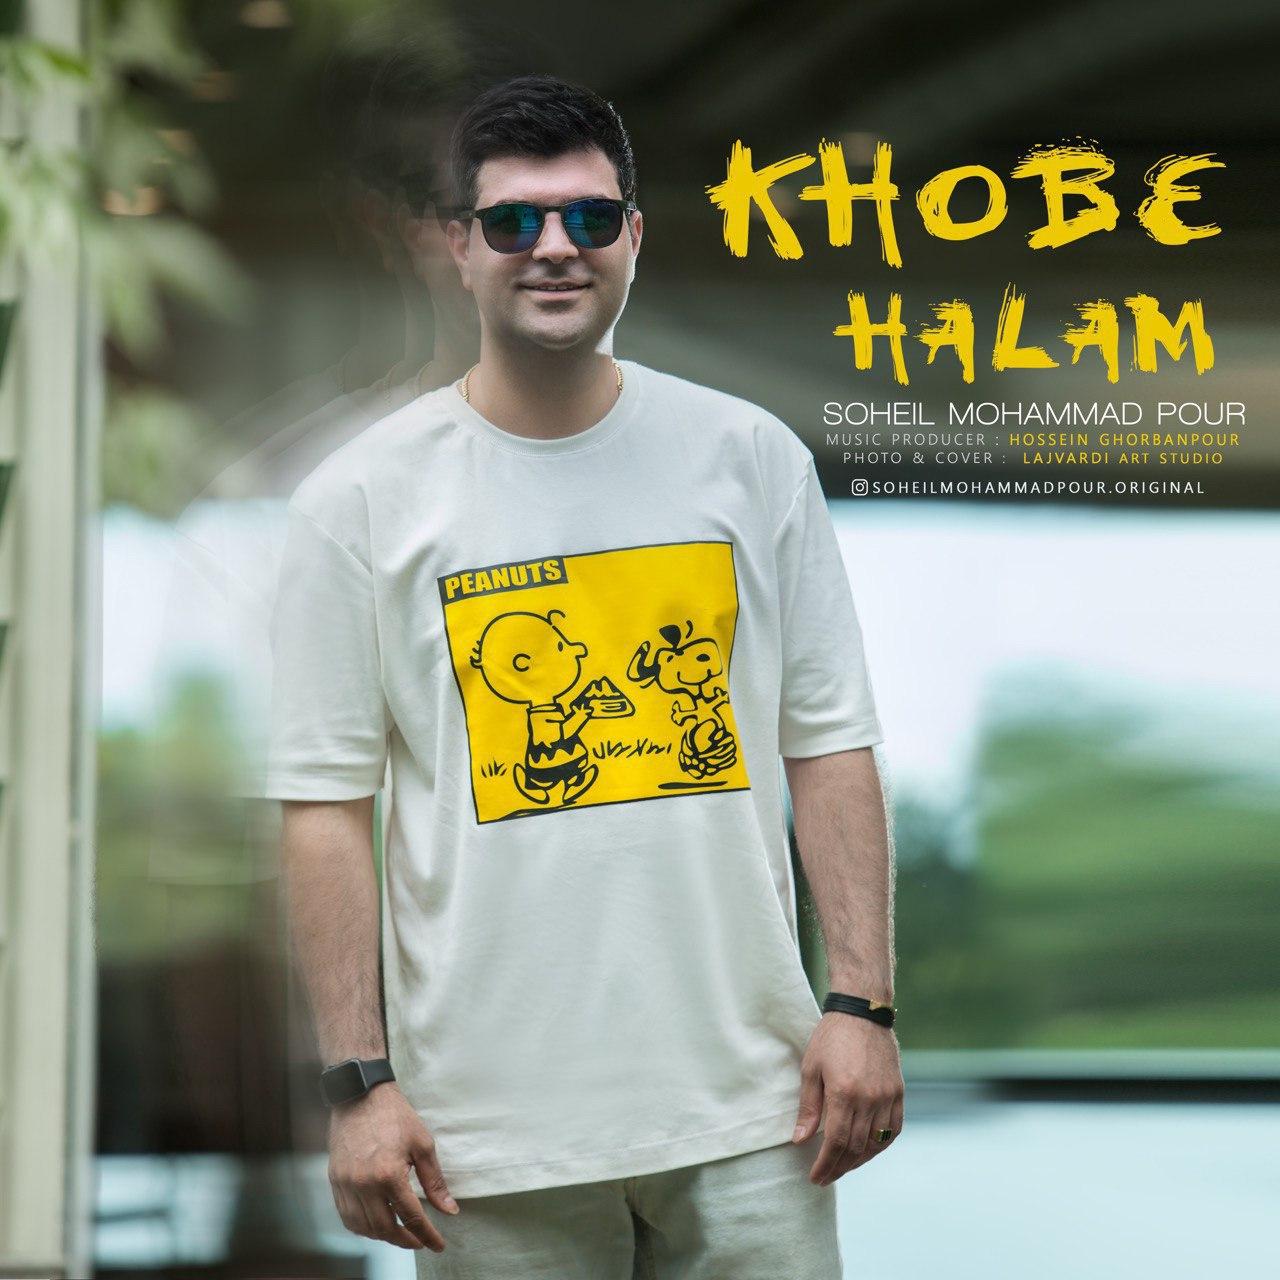 Soheil Mohammad Pour – Khobe Halam